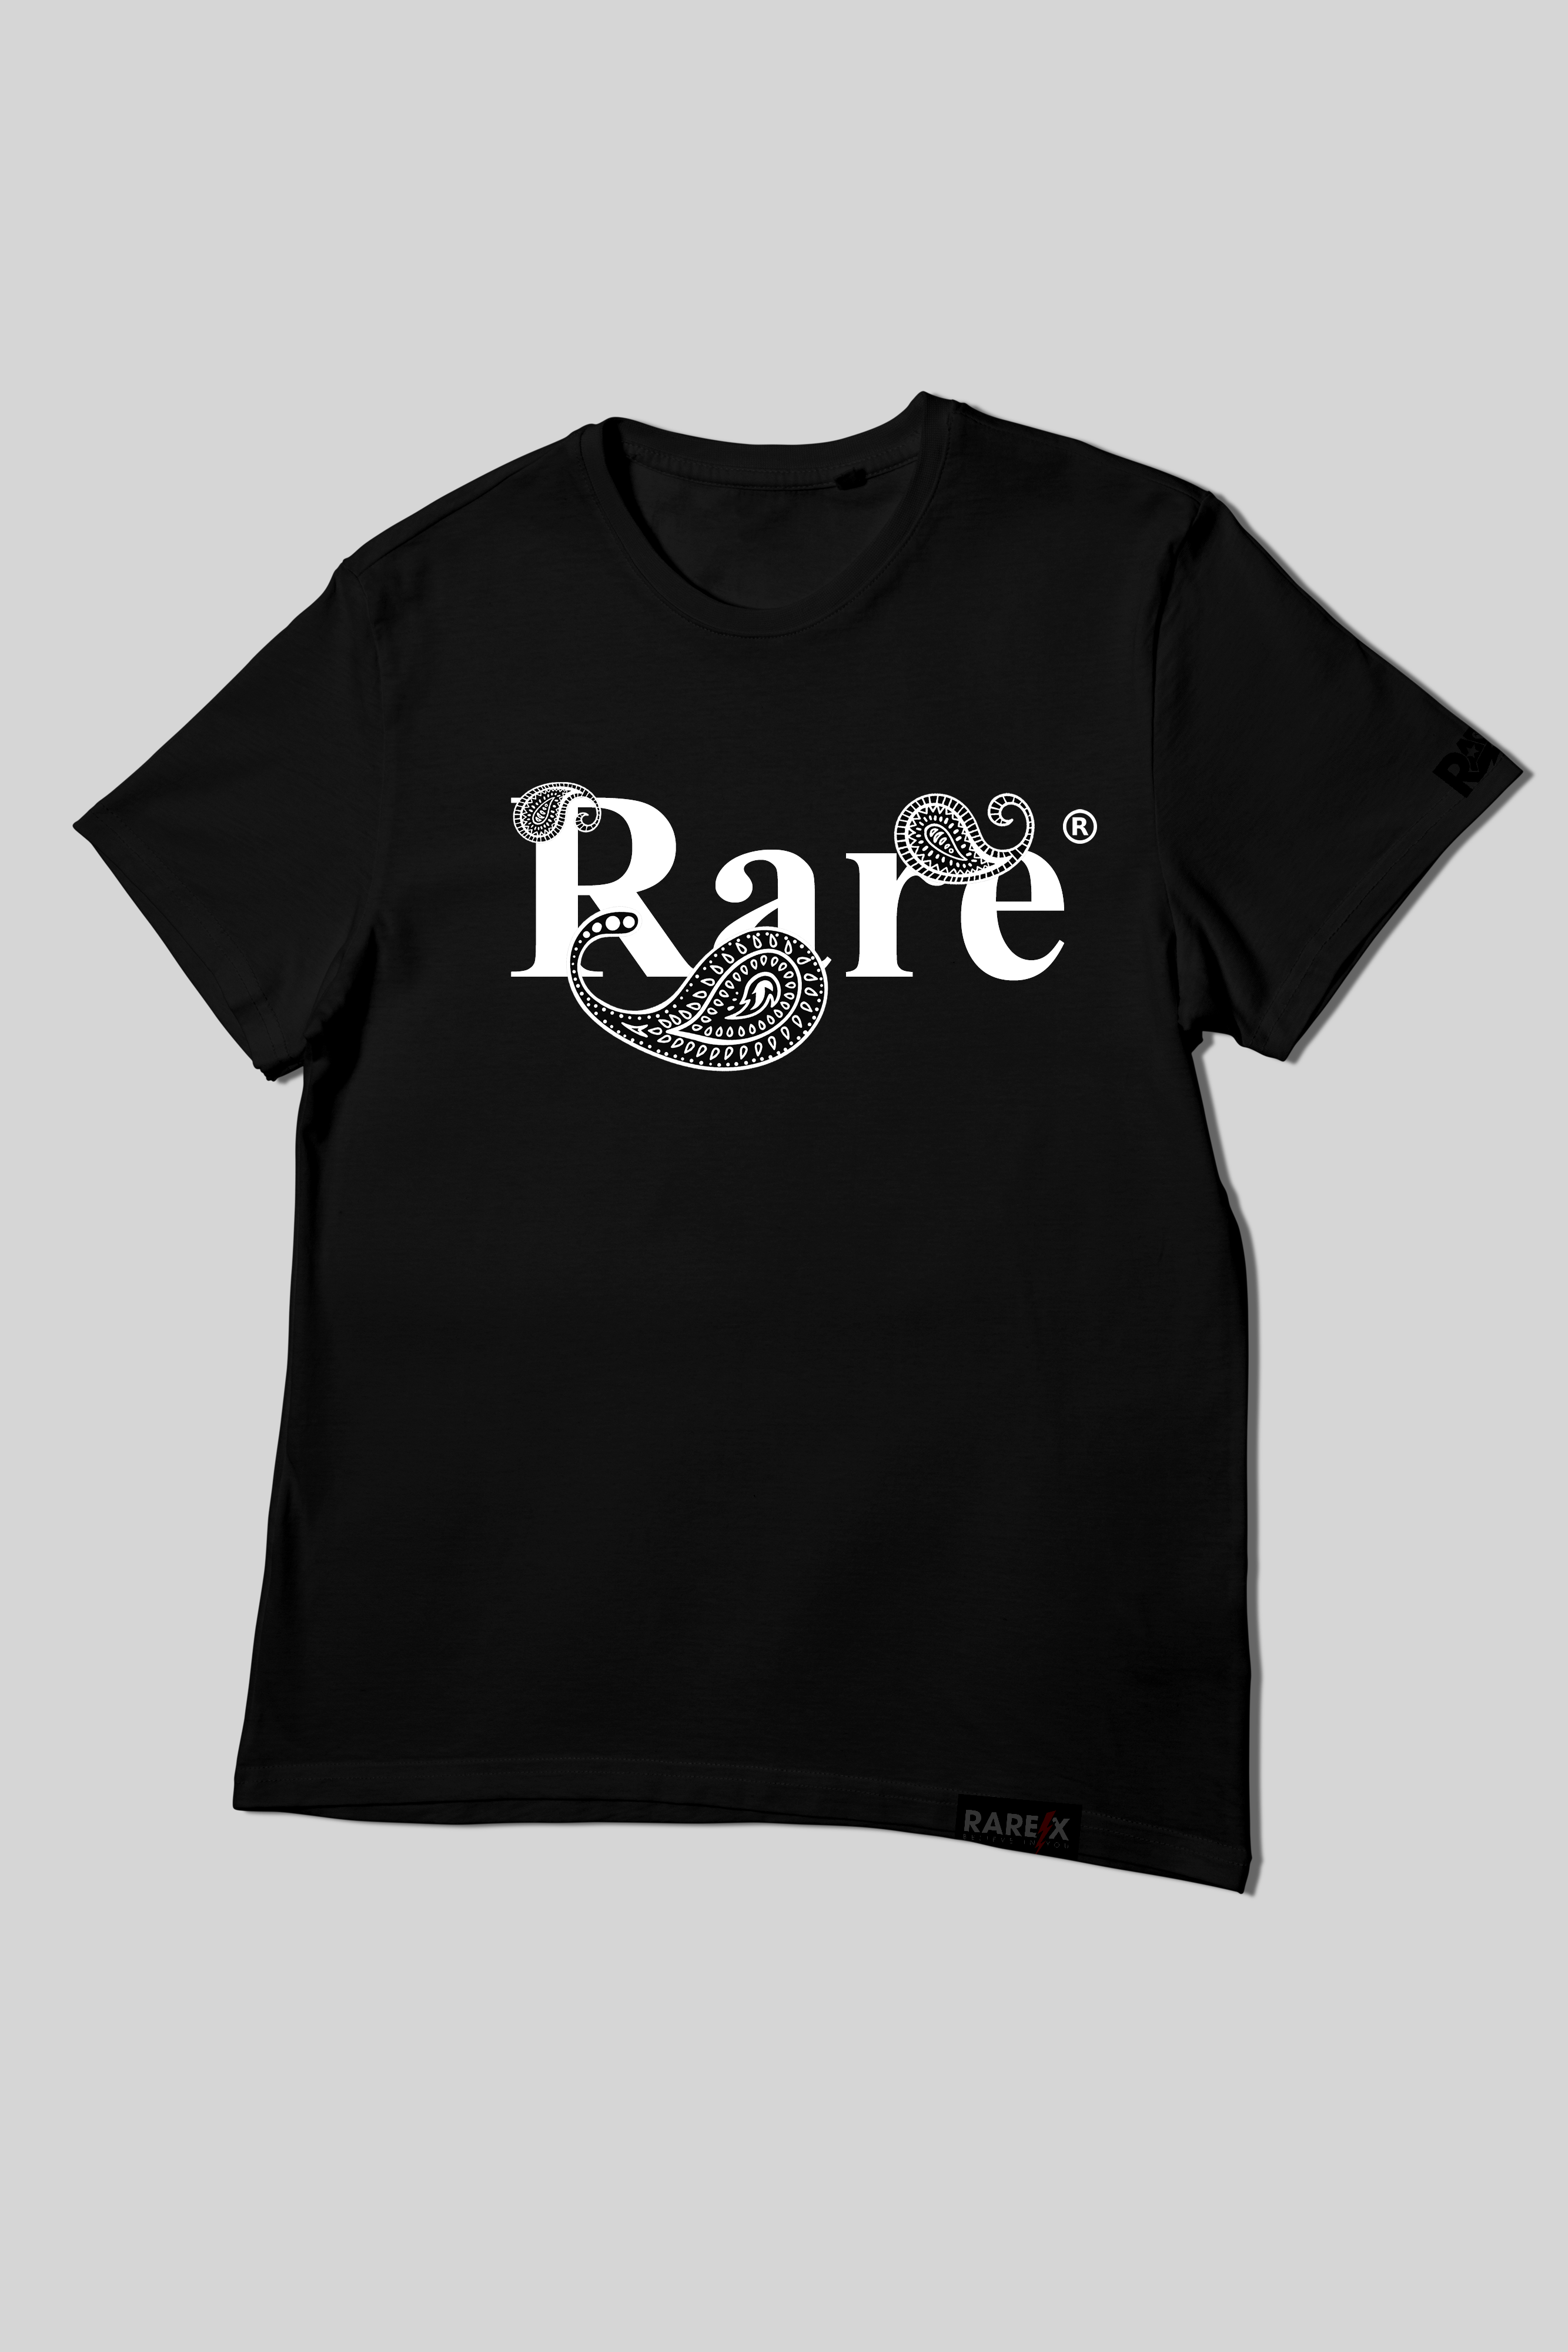 "Rare Bandana" Rare T-shirts